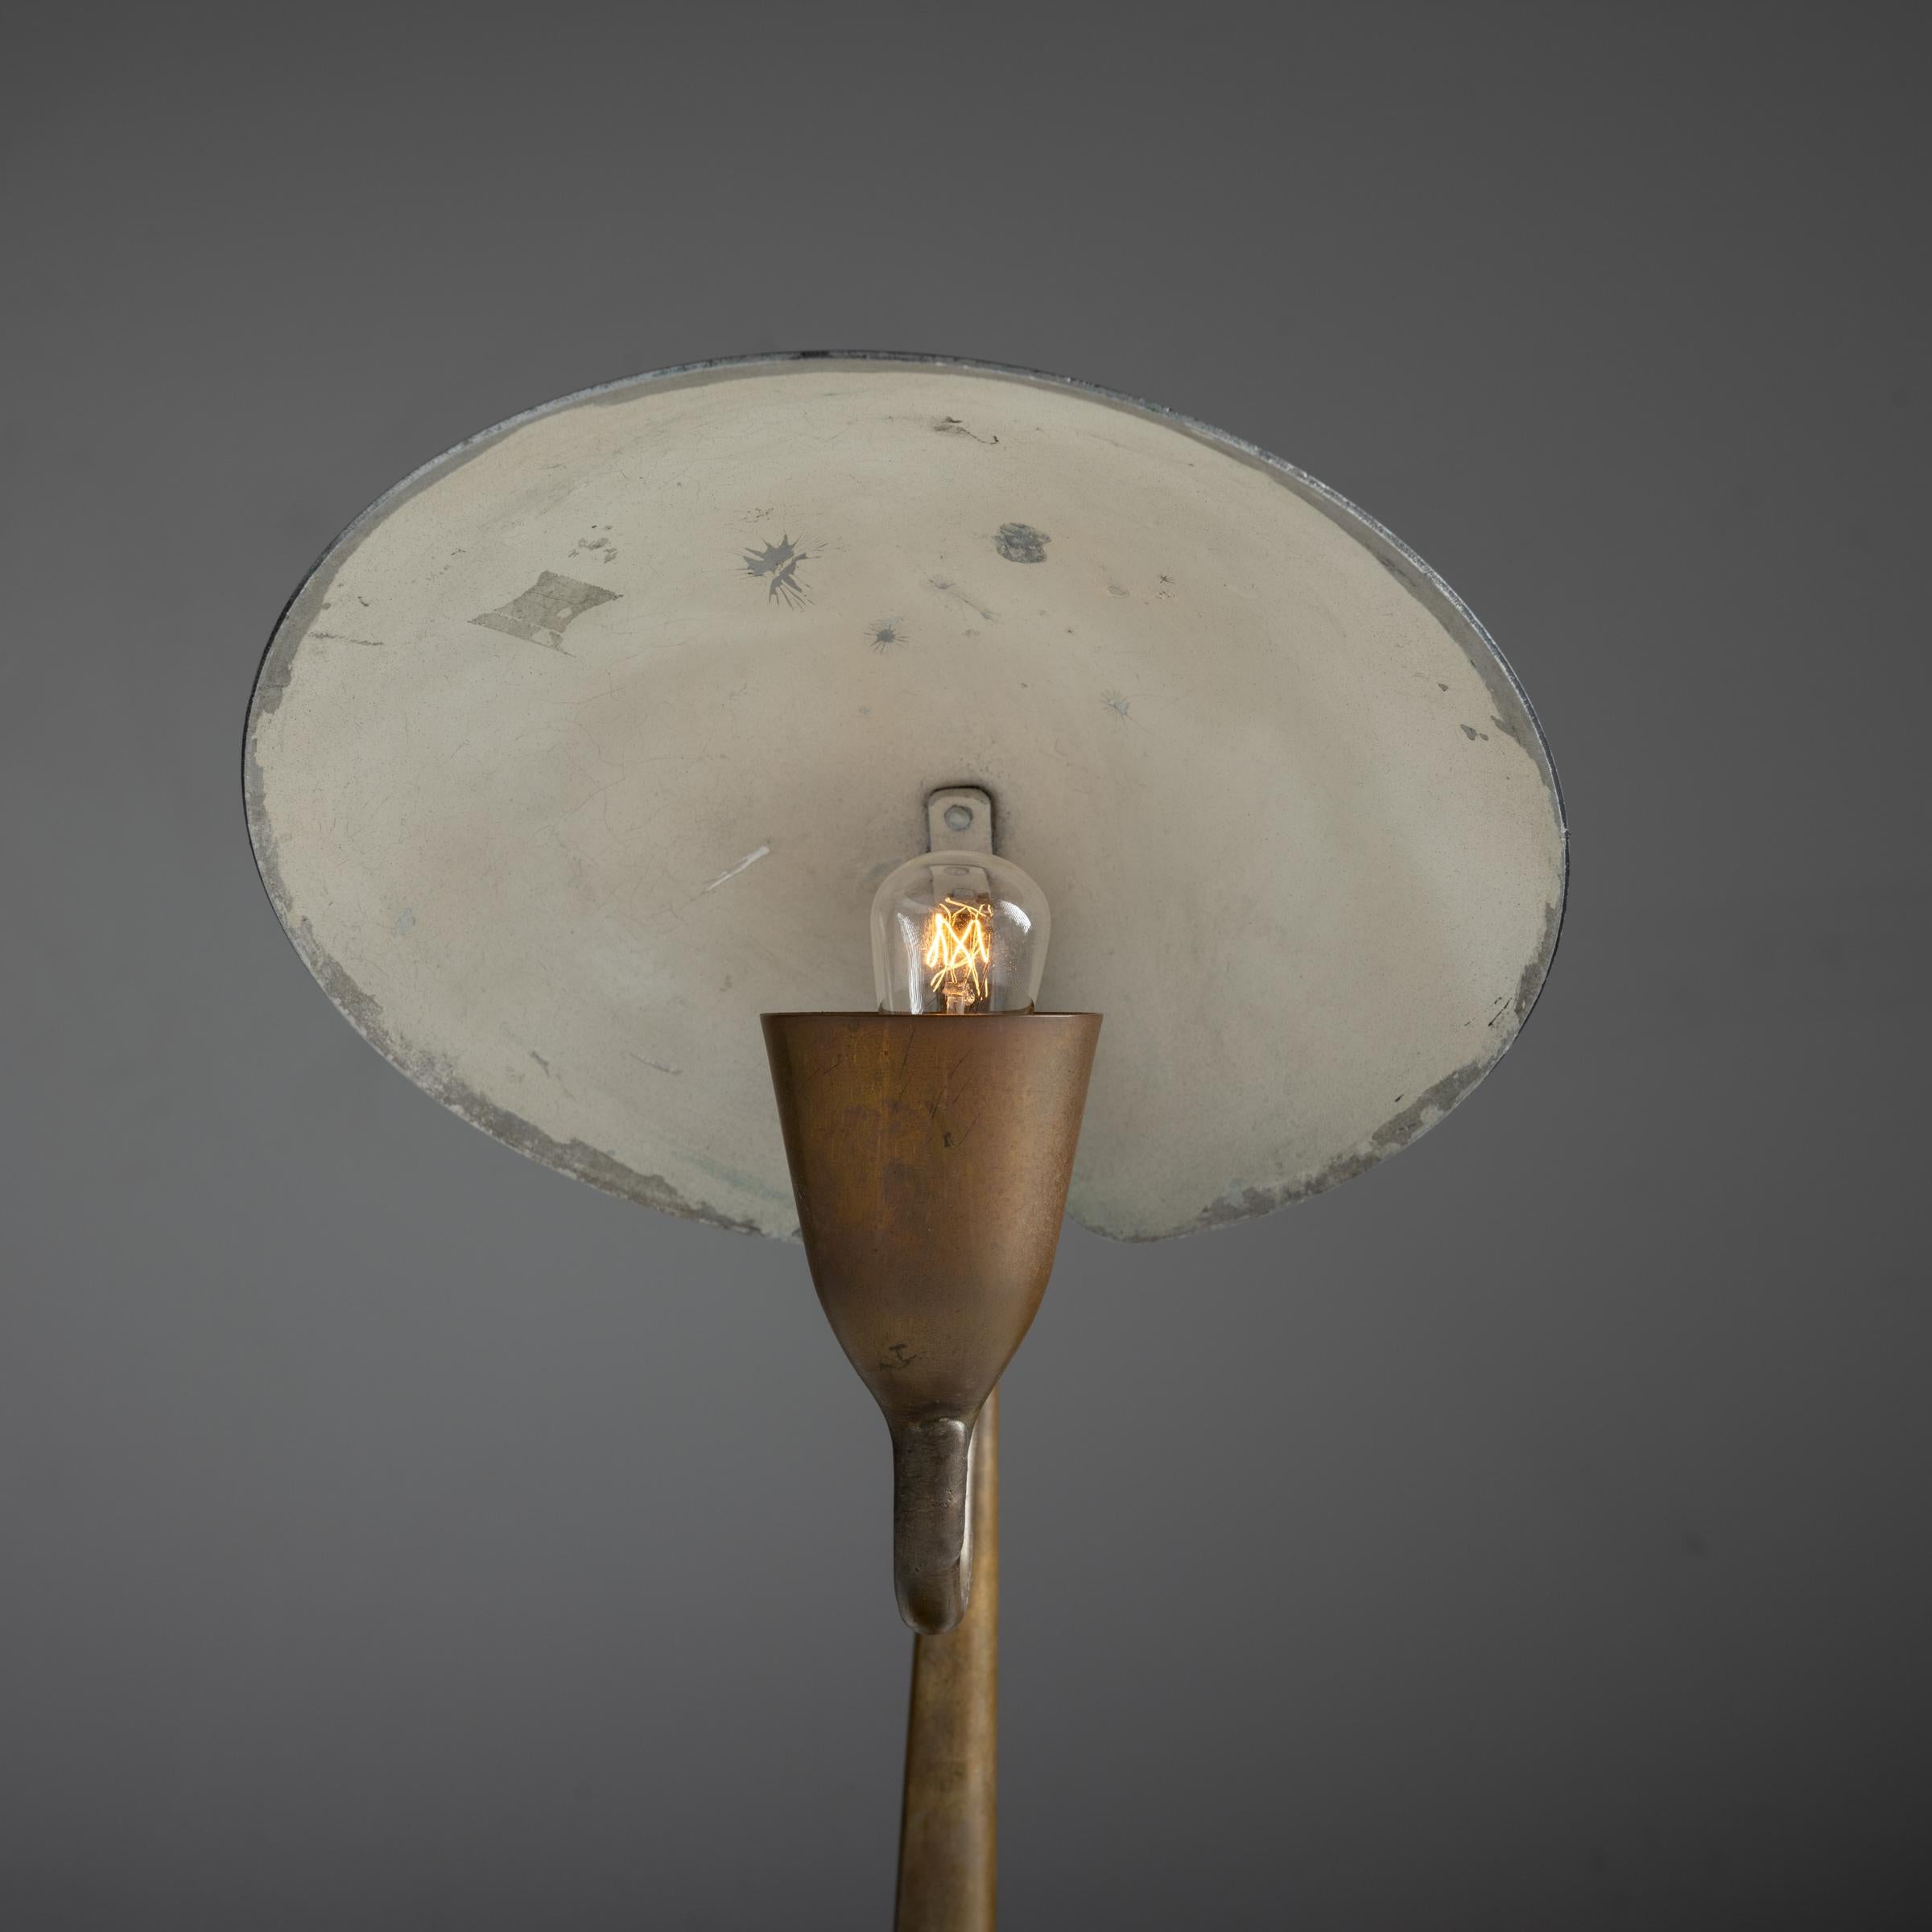 Tischlampe Modell 200 von Giuseppe Ostuni für Oluce (20. Jahrhundert)